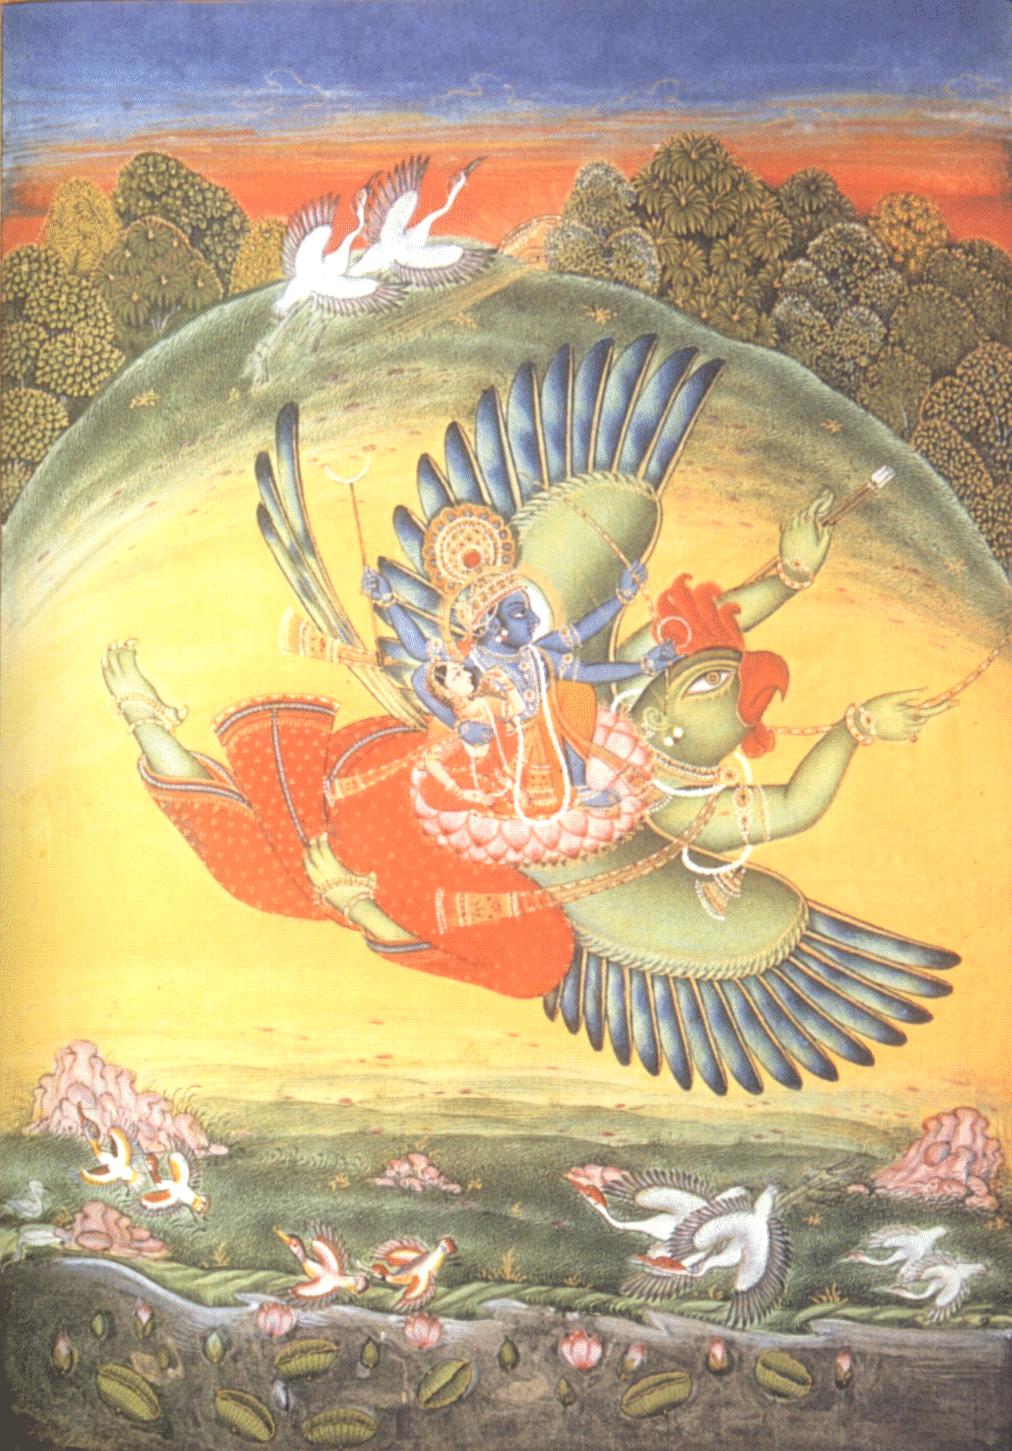 Vishnu and Lakshmi riding on the giant eagle Garuda